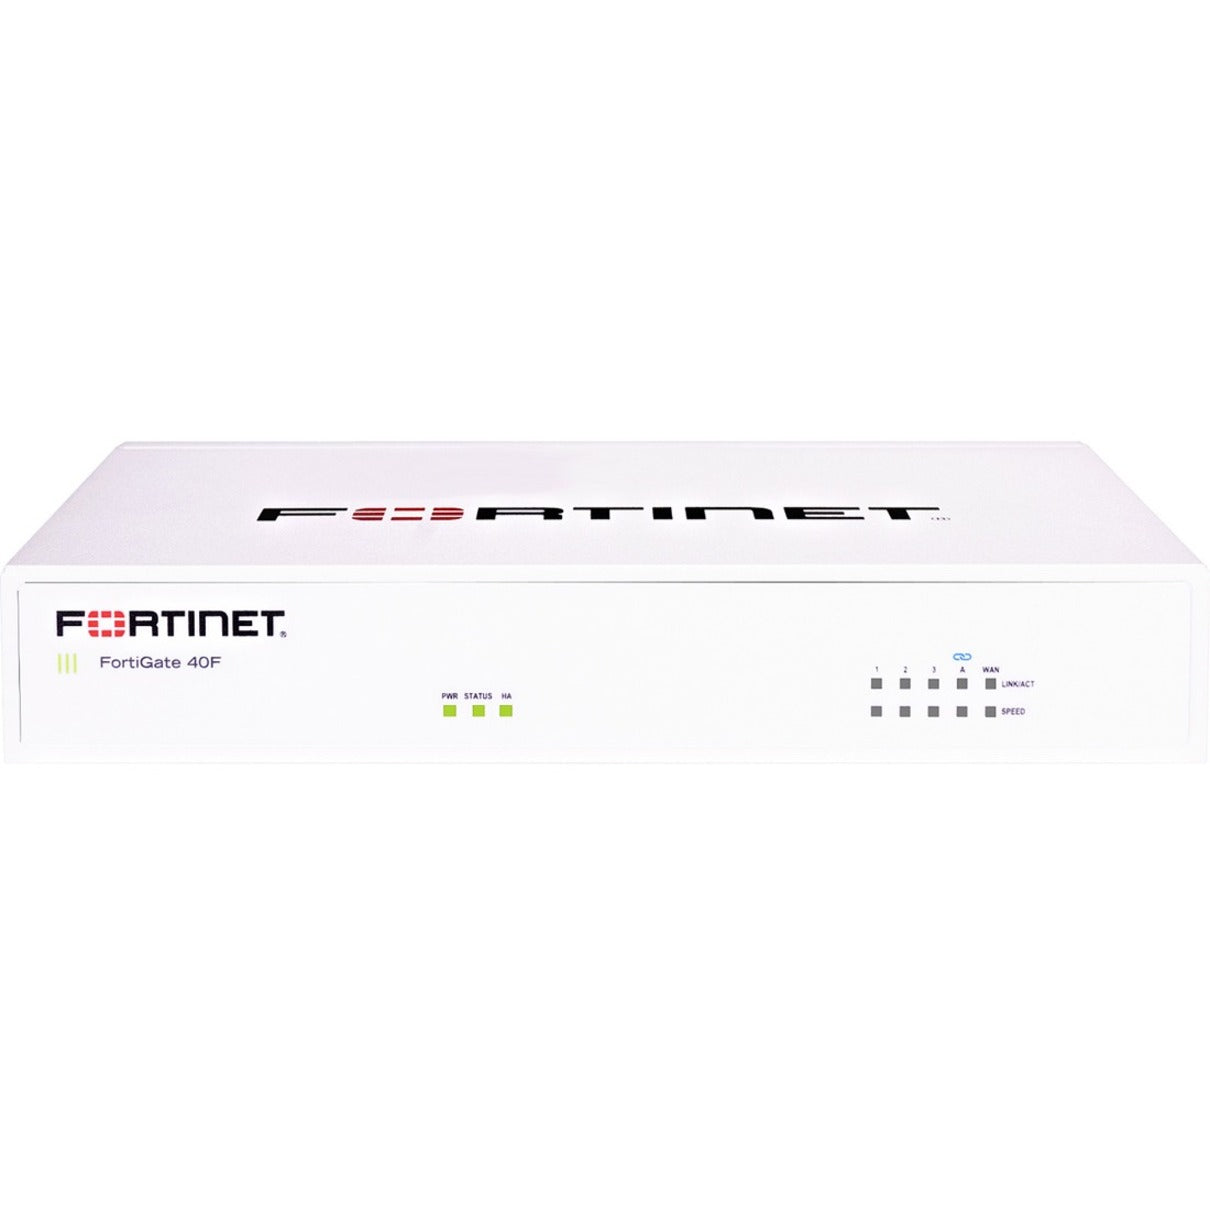 Fortinet FG-40F FortiGate Network Security/Firewall Appliance, 5 Ports, Gigabit Ethernet, USB, Wall Mountable